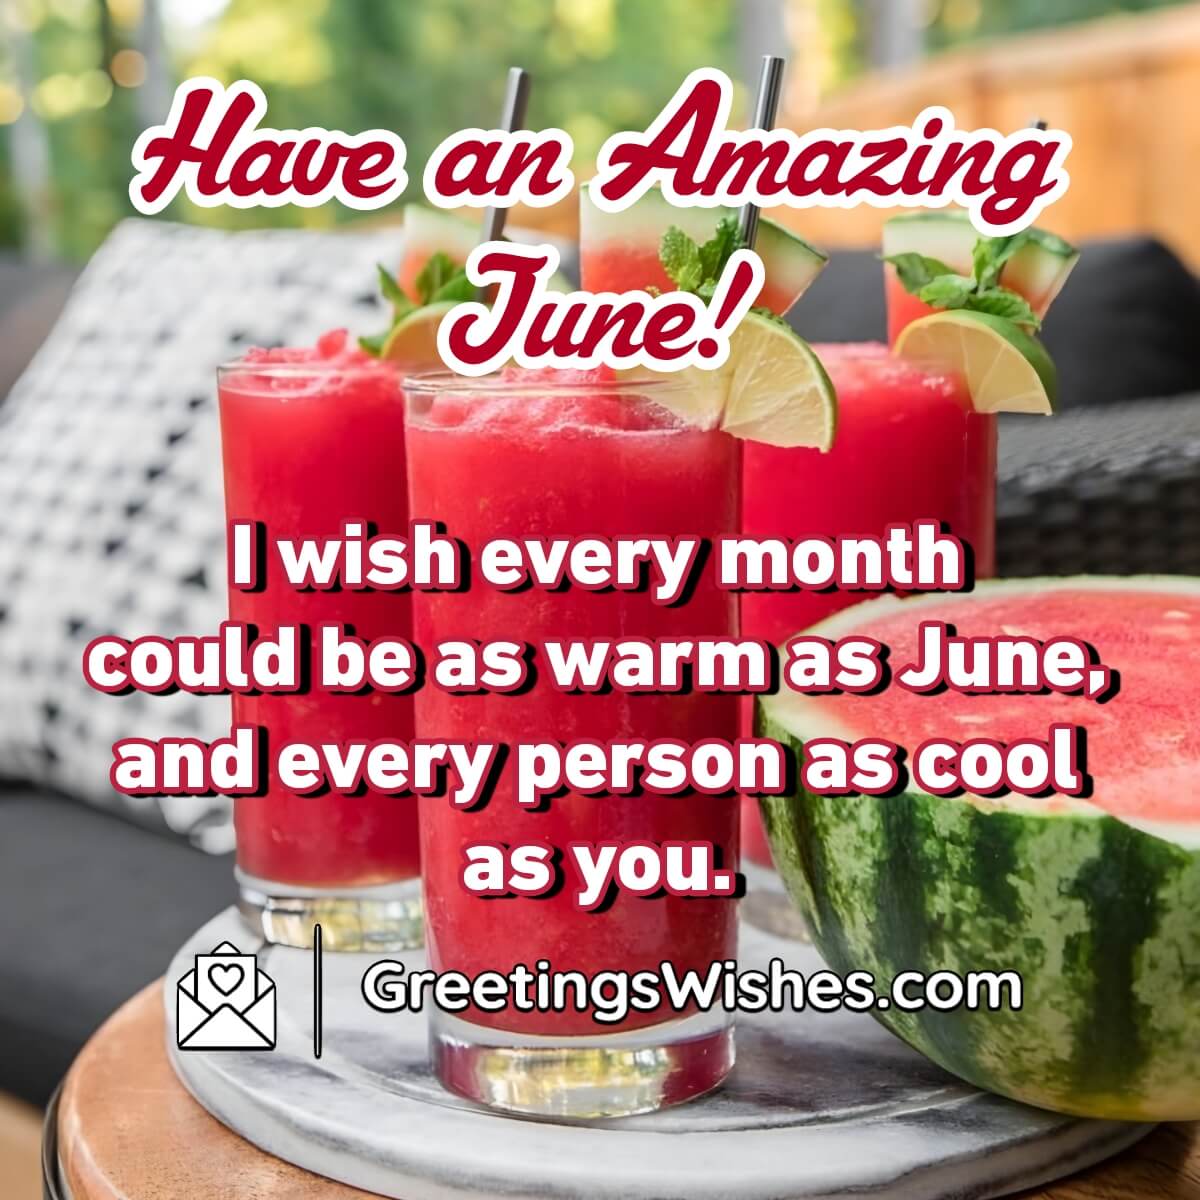 Happy June Wish Image